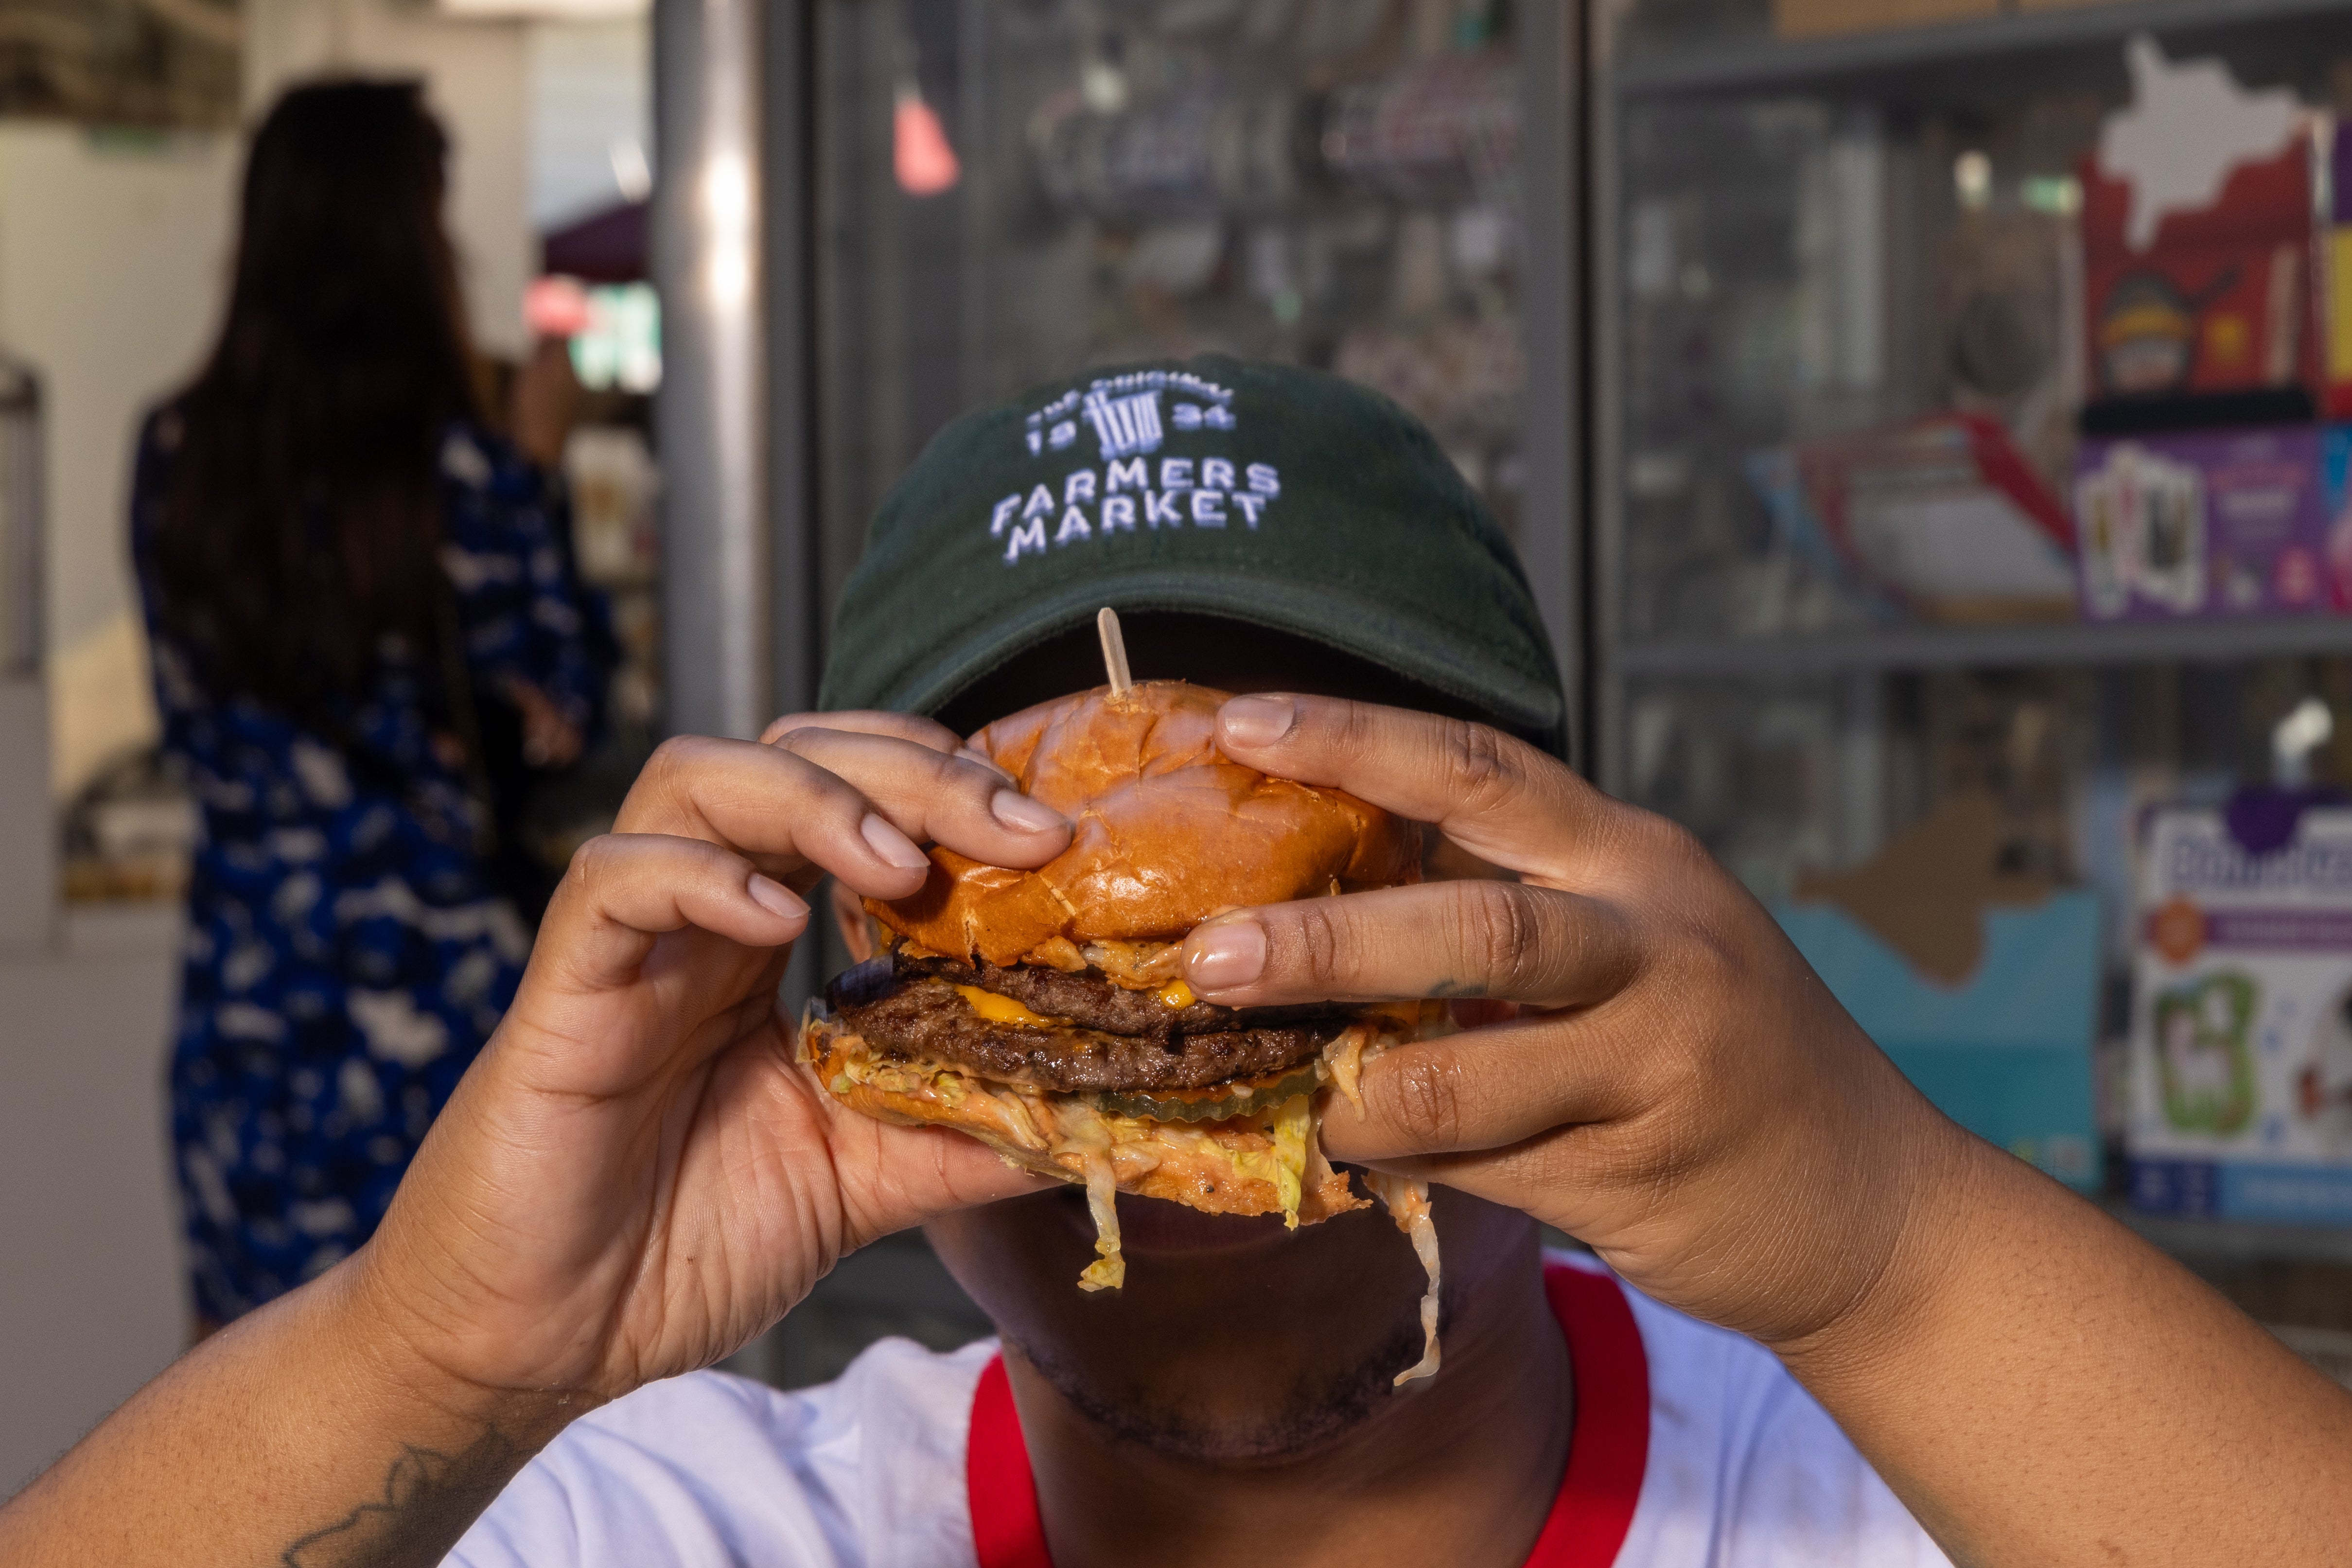 THE BIG DILL: THICC Burger x Kaylin + Kaylin Pickles